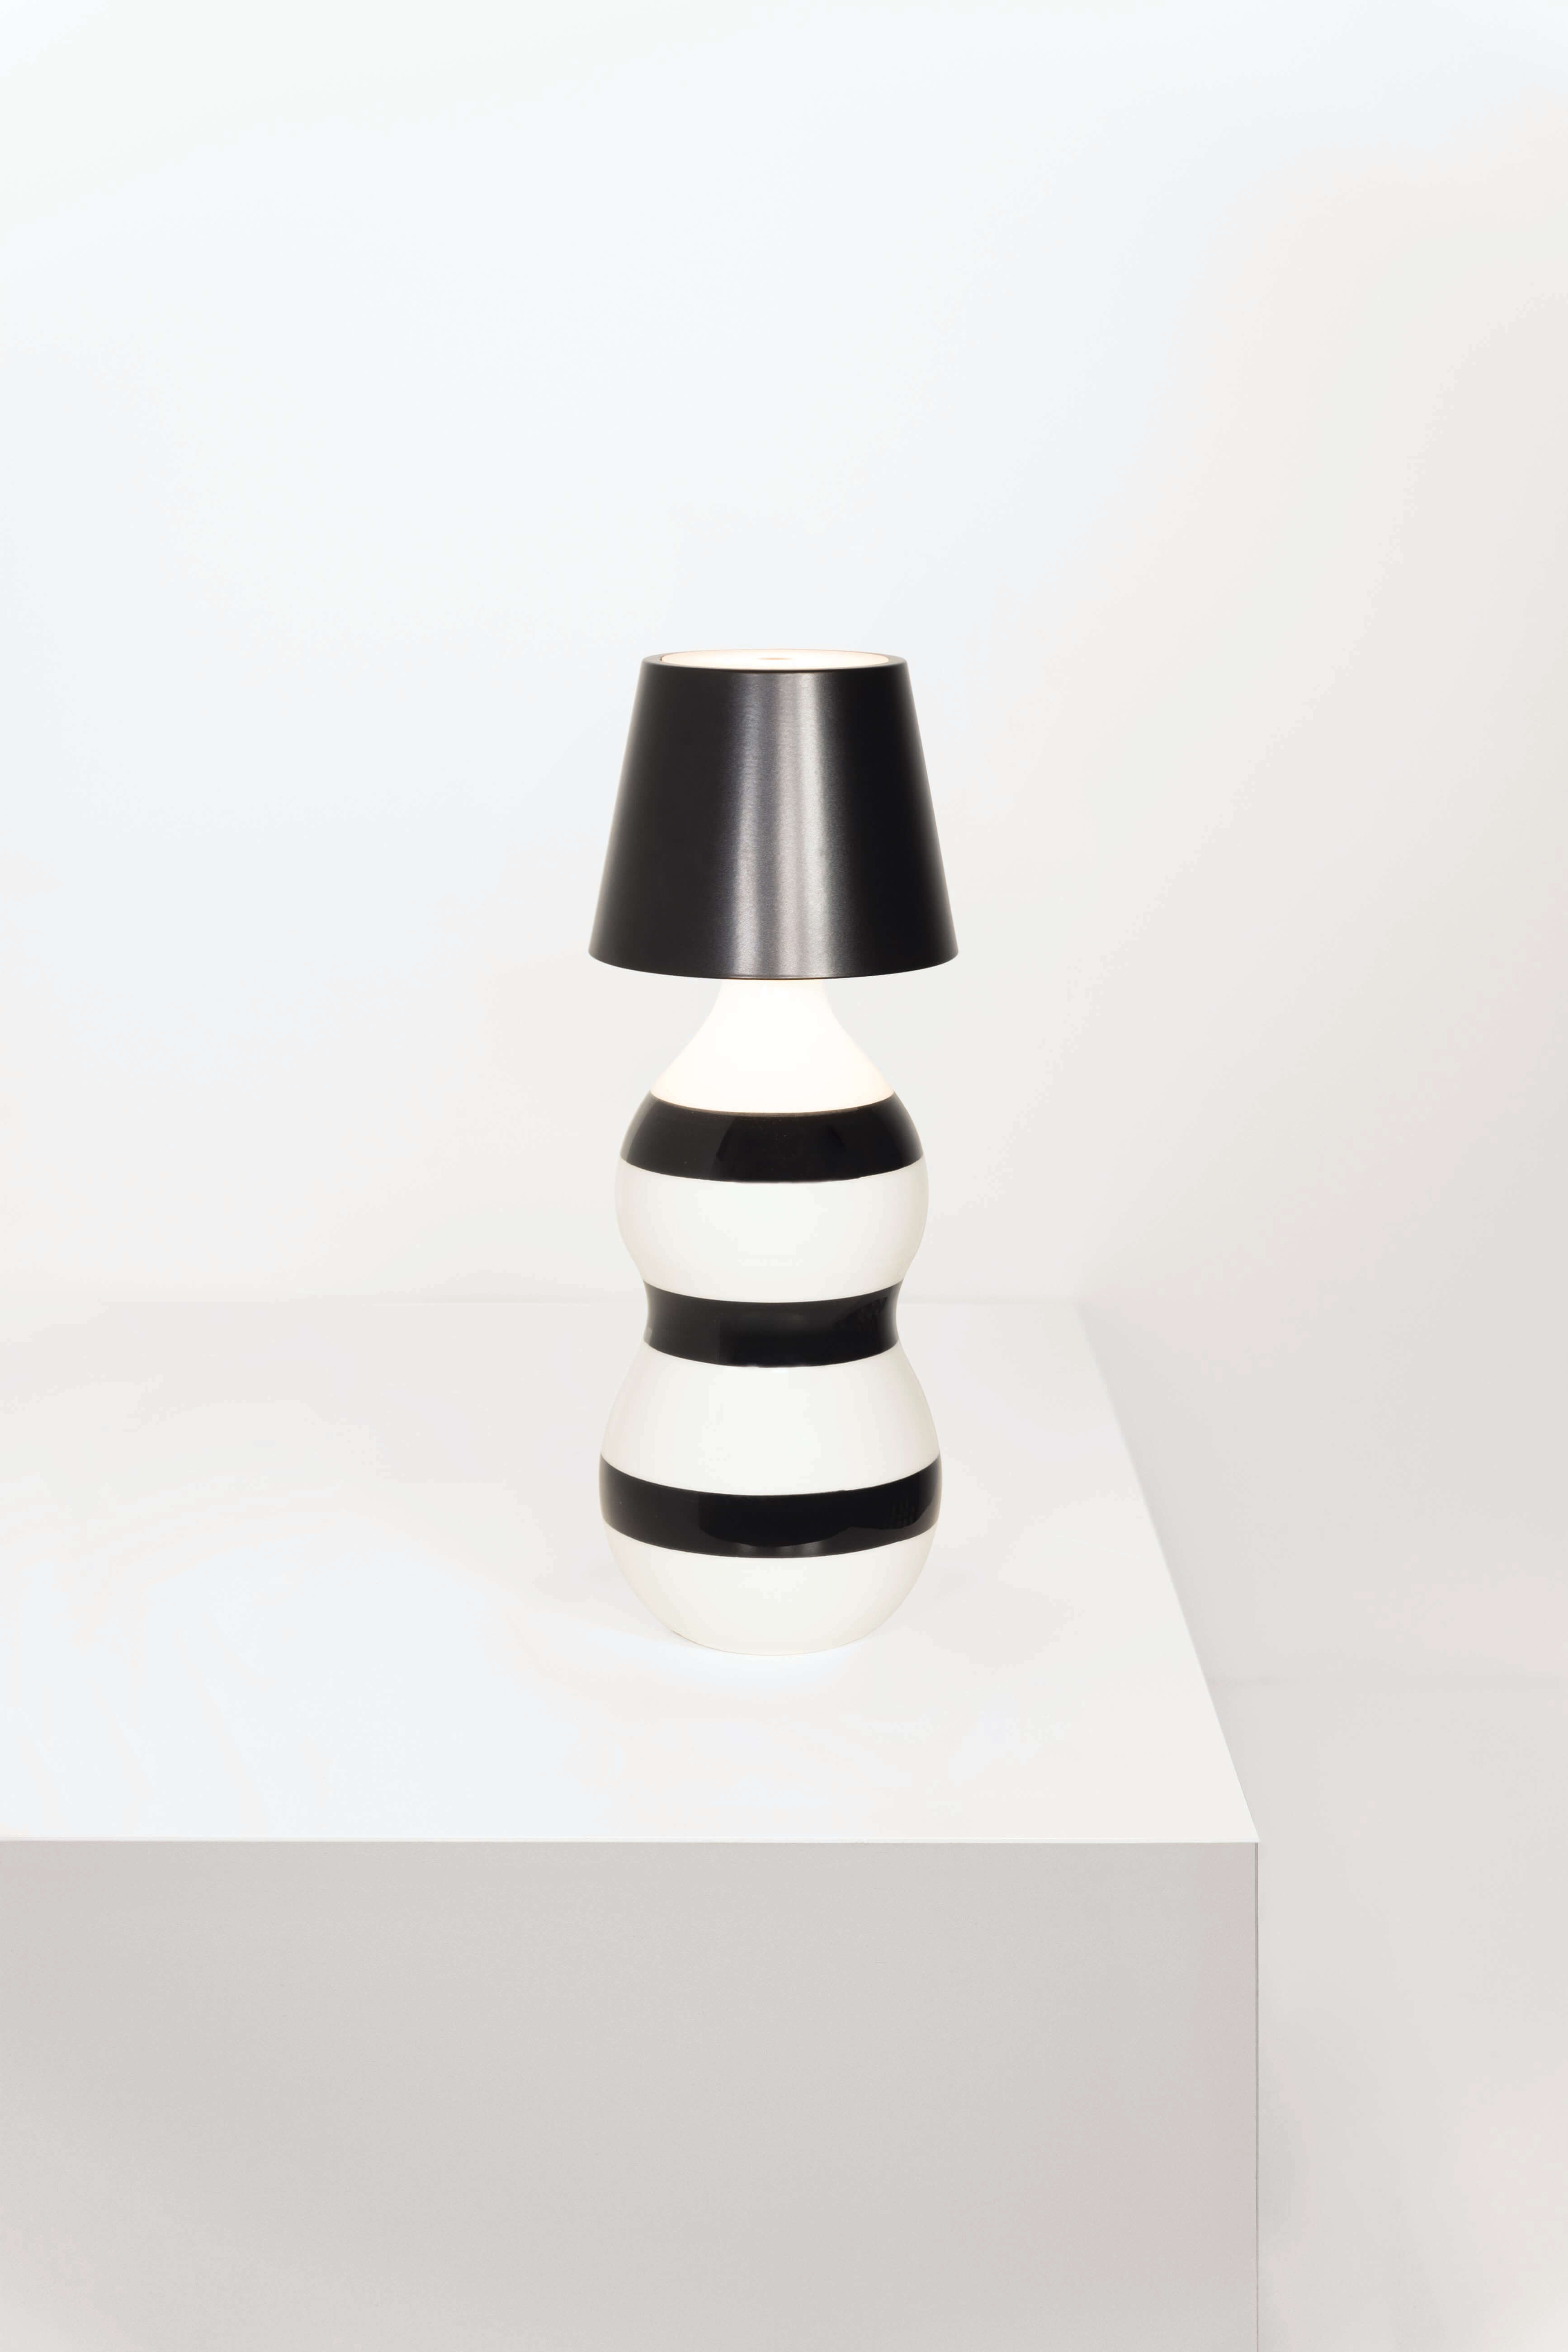 Zafferano Lido Keramik Flasche mit horizontalen Ringen in schwarz